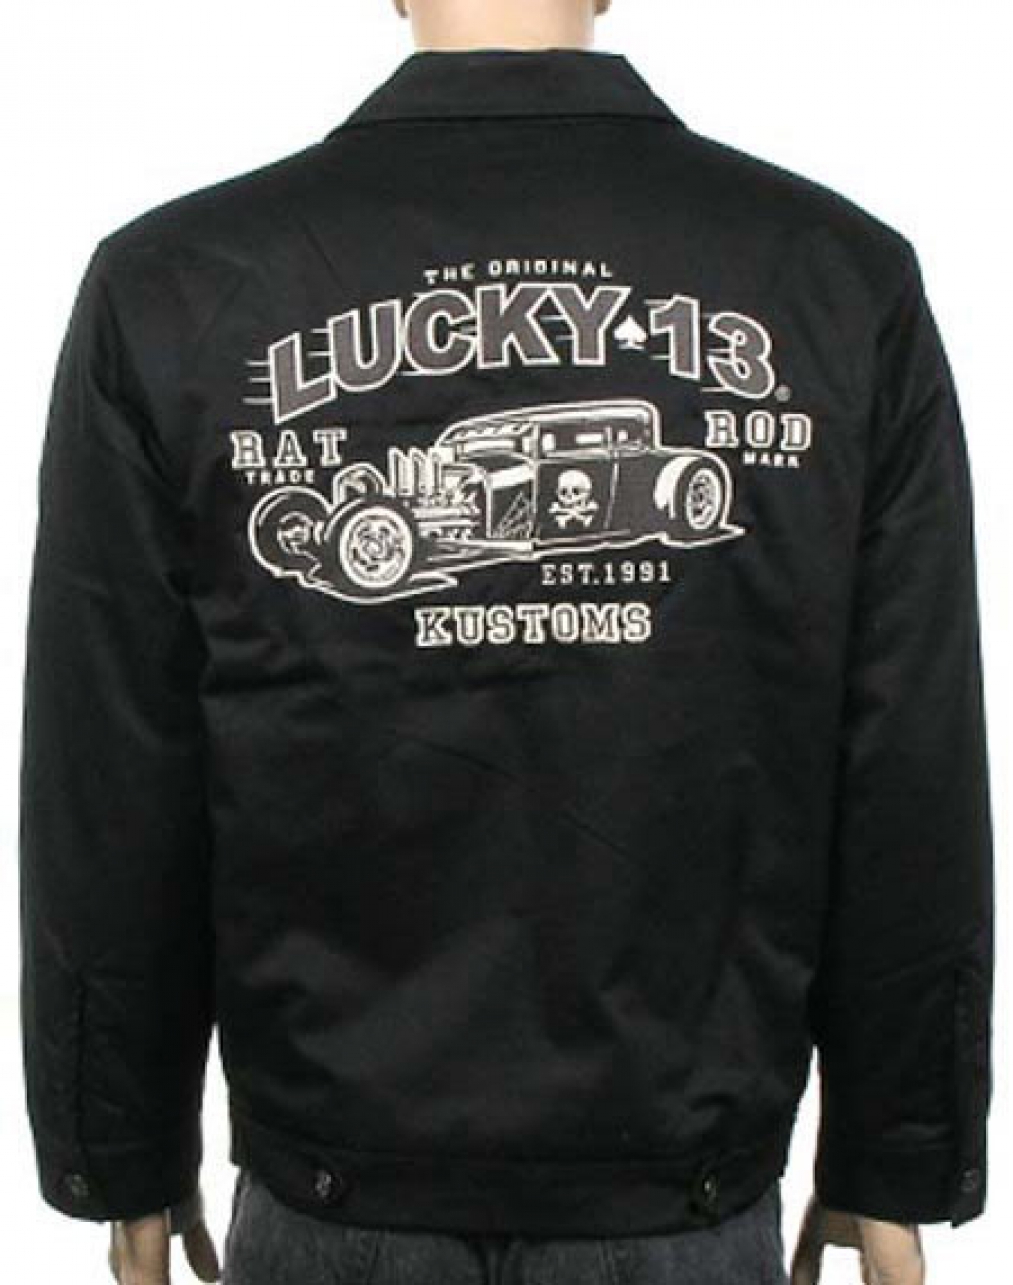 Original Lucky 13 Work-Jacket Jacket-Hot Rod-Size S - 2xl | eBay